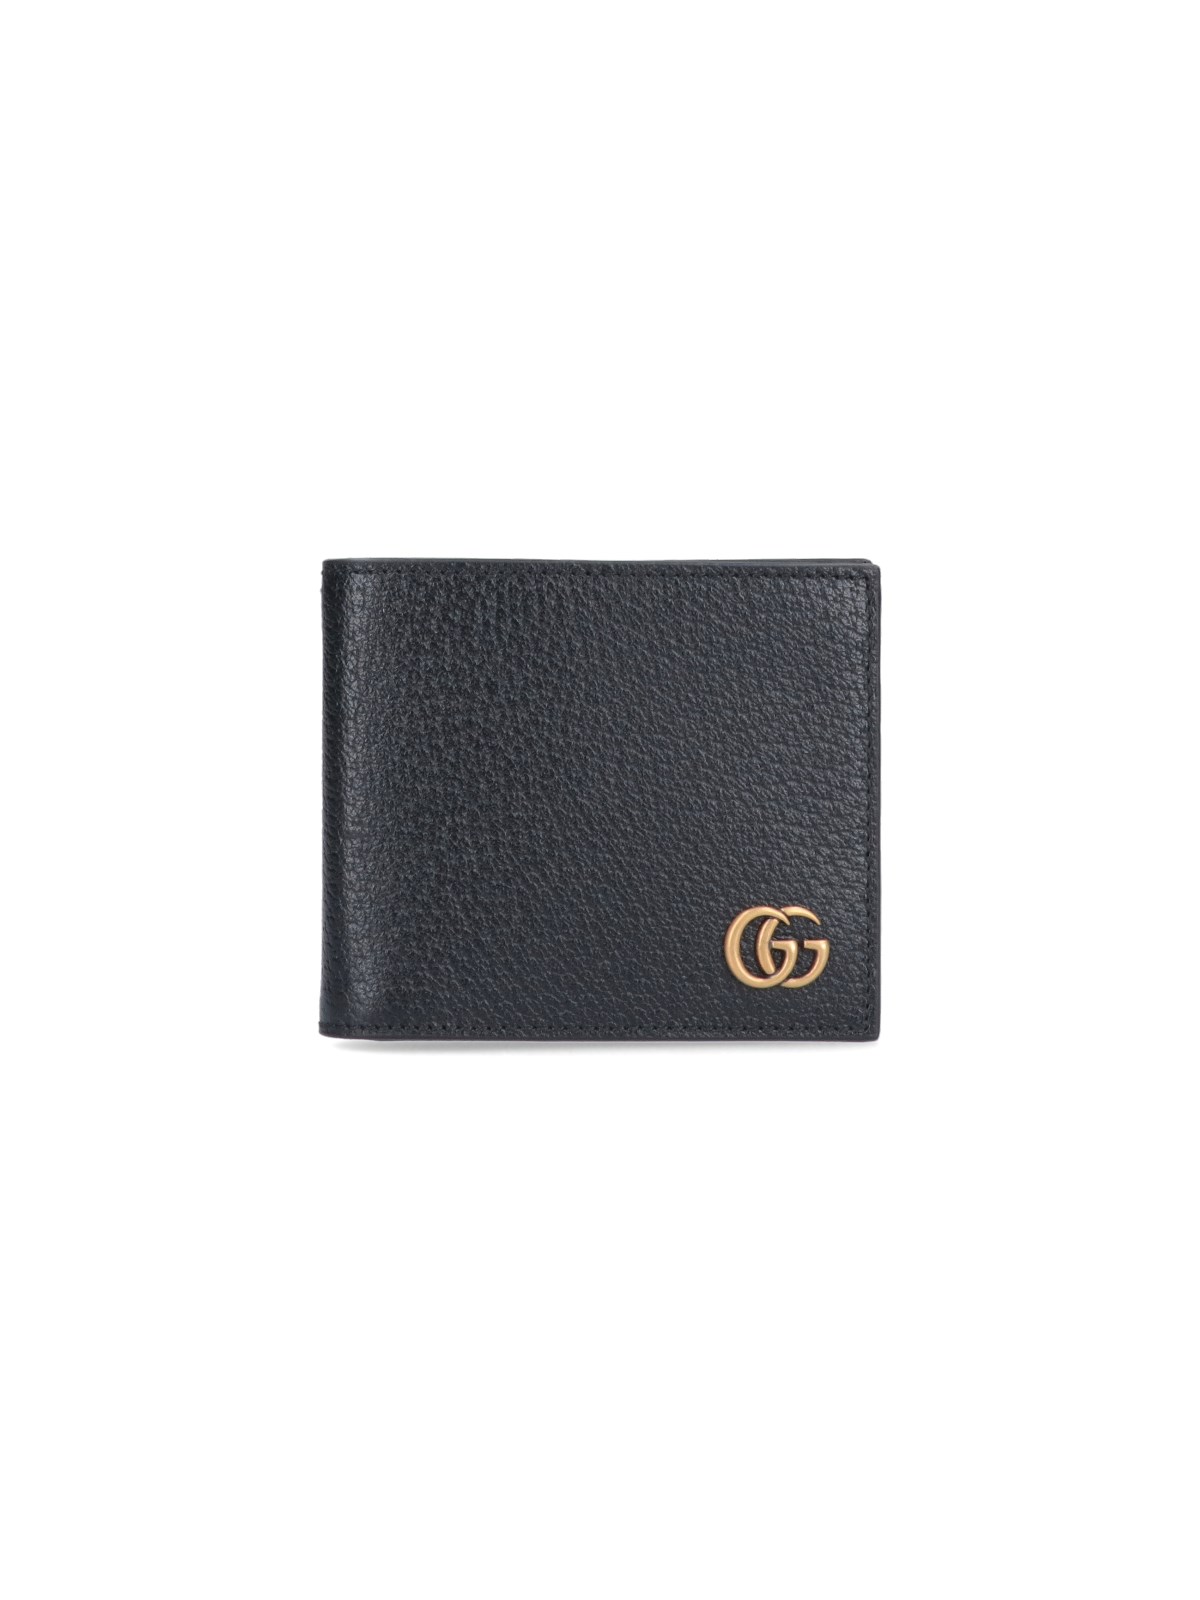 GG Marmont leather bi-fold wallet